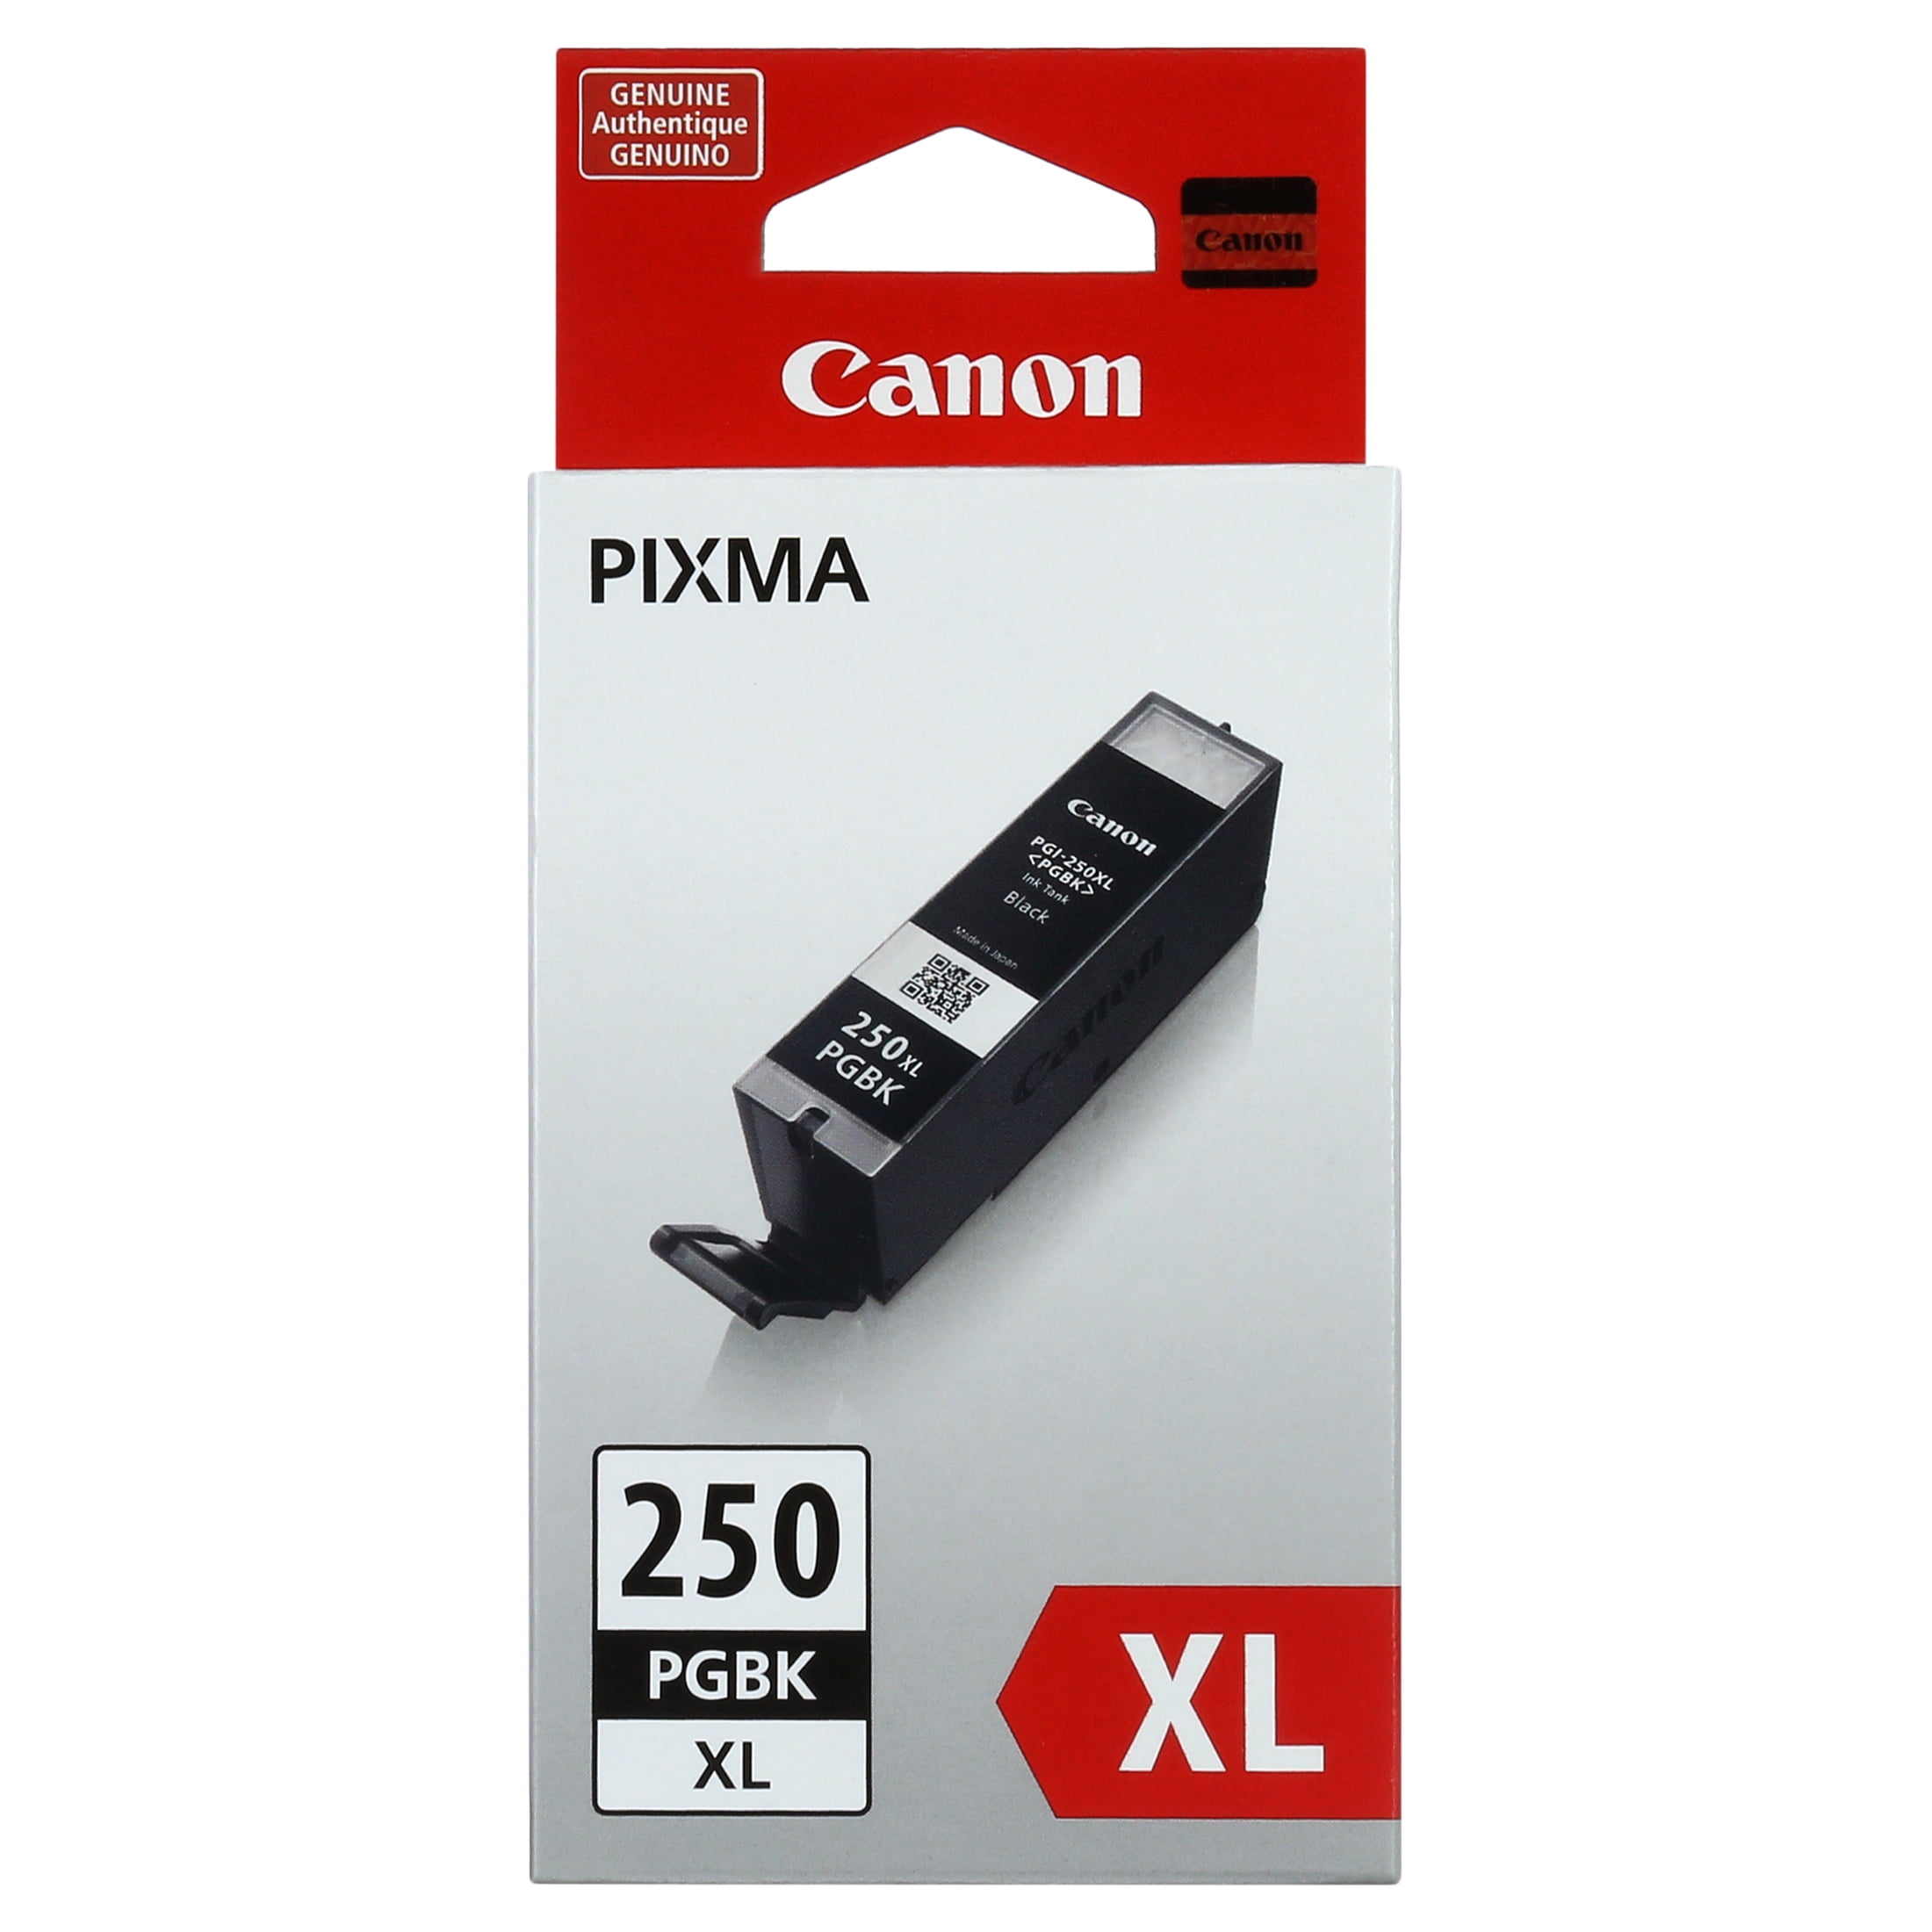 Seletøj Besættelse ubehageligt Canon PGI-251 XL Pigment Black Ink Tank, Compatible with PIXMA iP7220, PIXMA  MG7520, PIXMA MG7120, PIXMA MG6620, PIXMA MG6320, PIXMA MG5420, PIXMA  MG5522, PIXMA MG5622 and PIXMA MX922 - Walmart.com